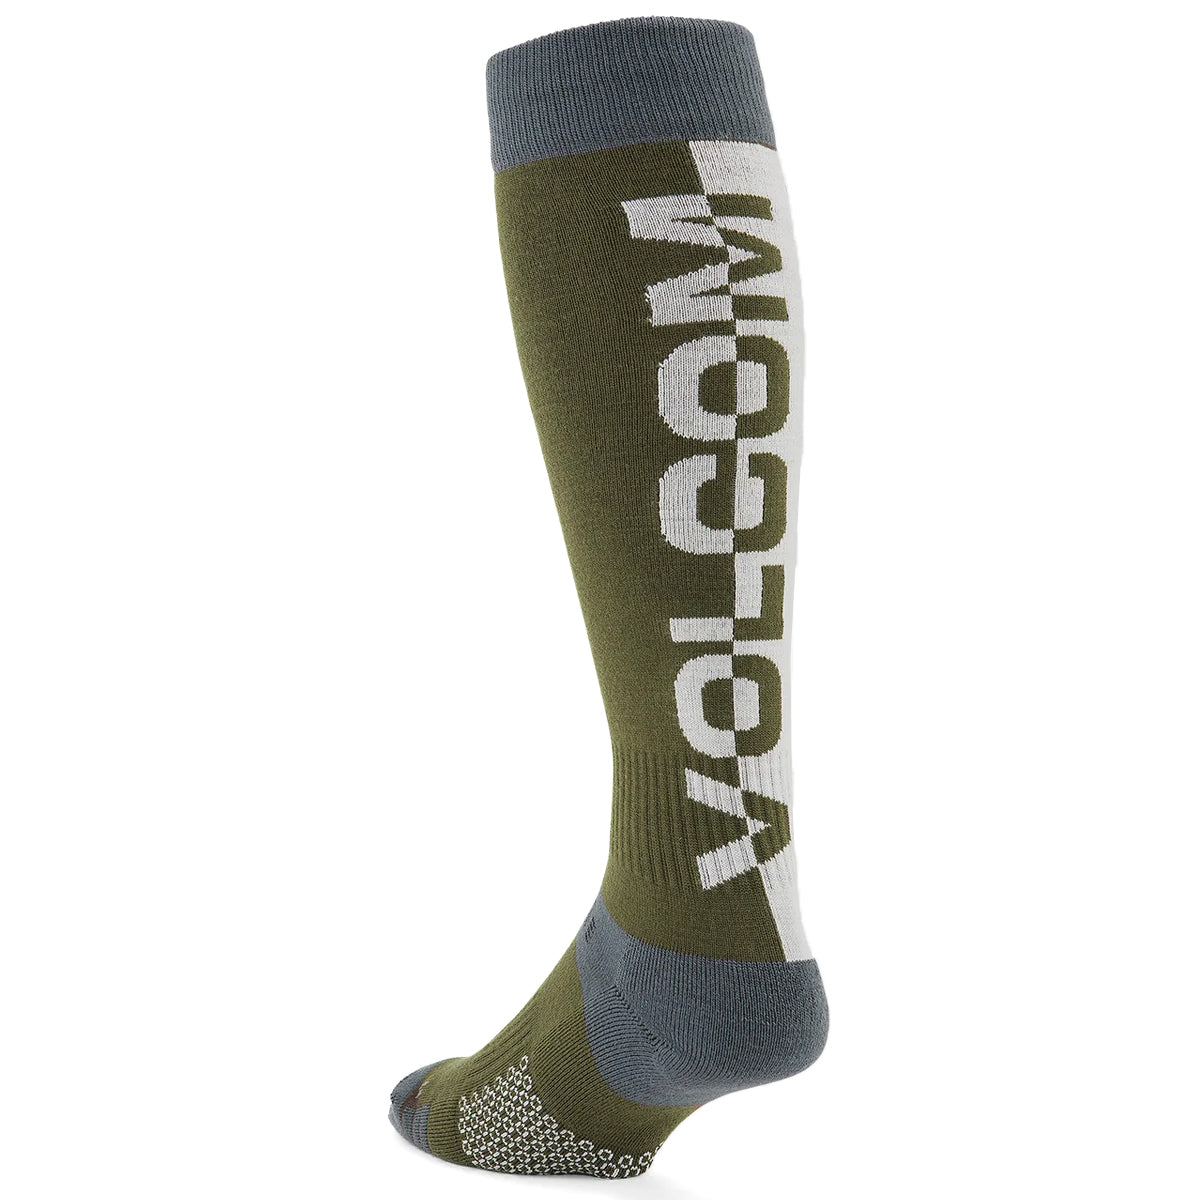 Volcom Synth Snowboard Socks - Military image 2